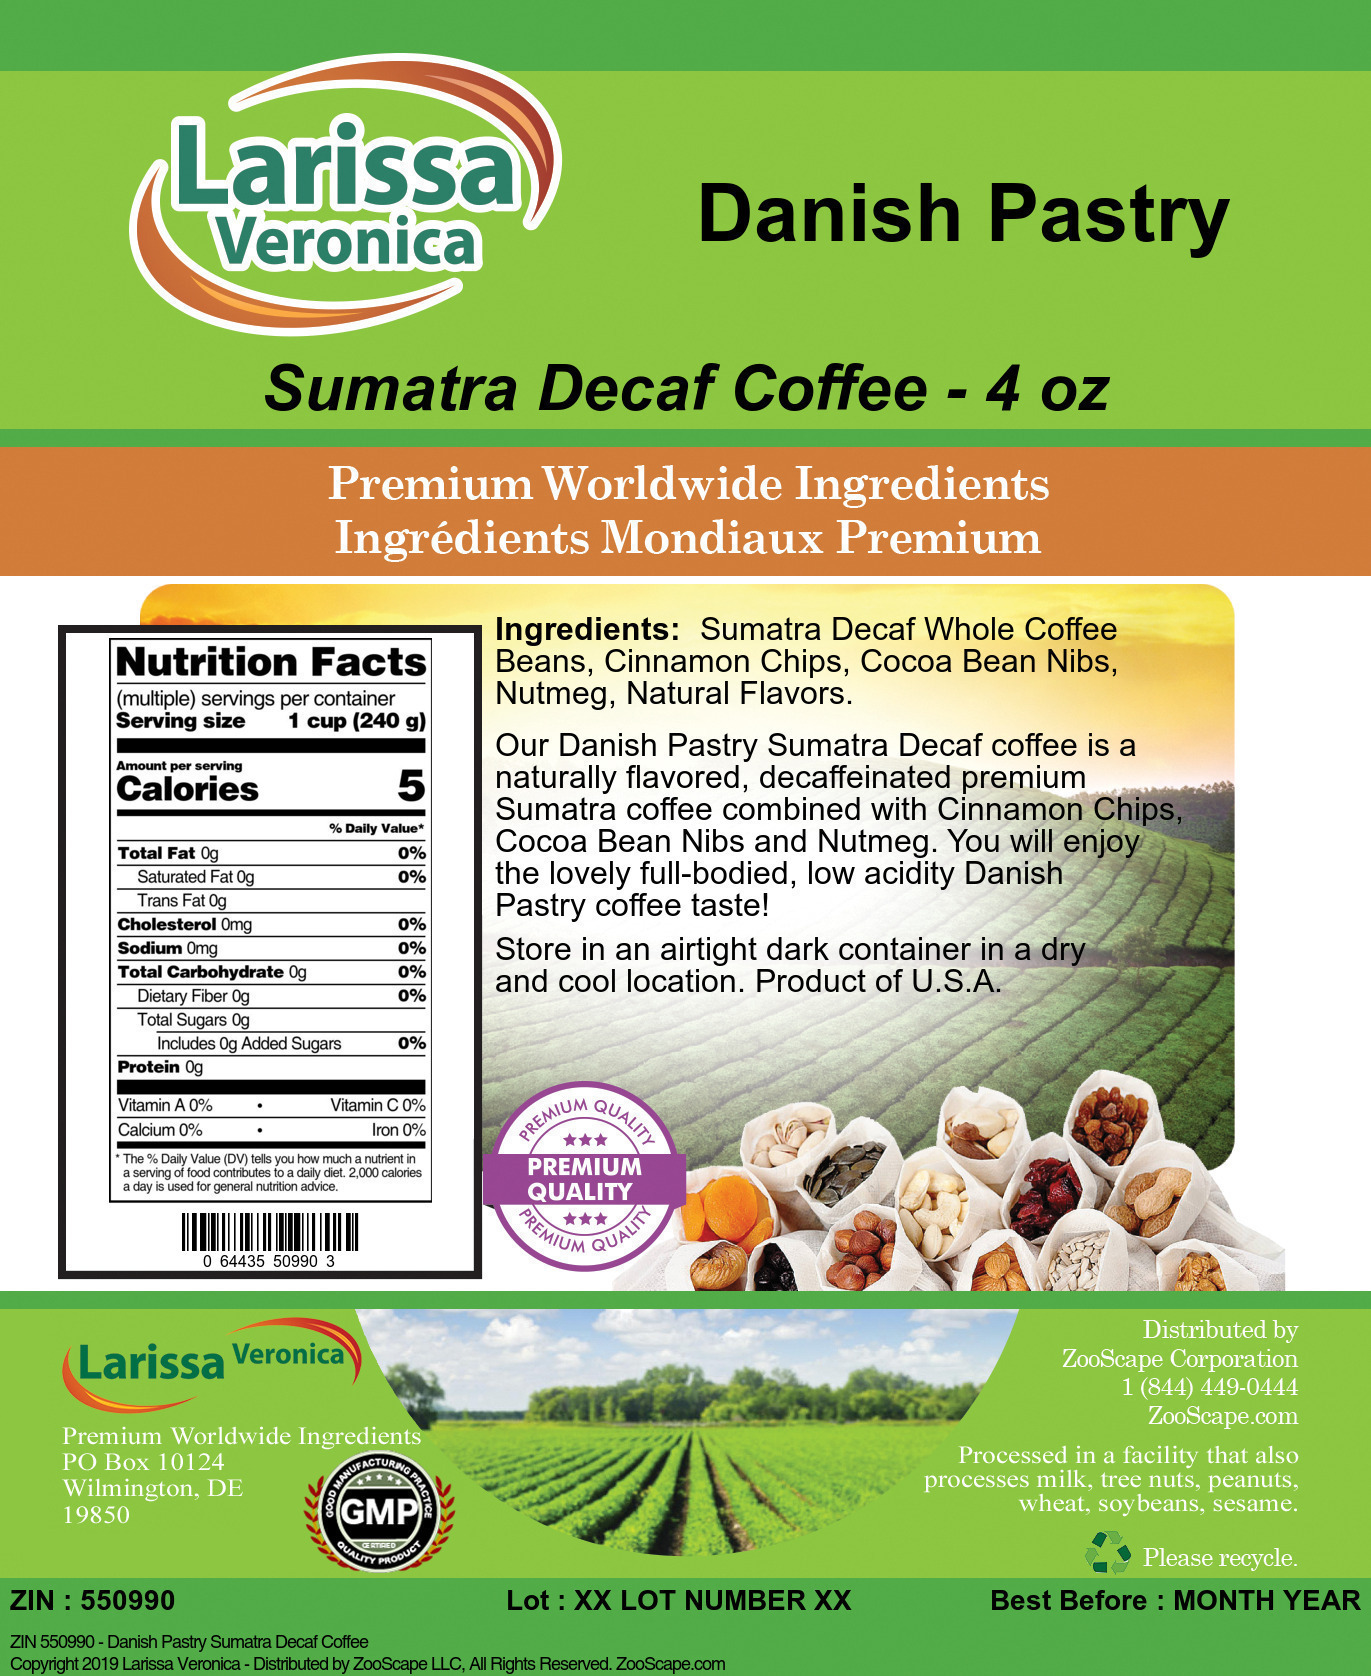 Danish Pastry Sumatra Decaf Coffee - Label